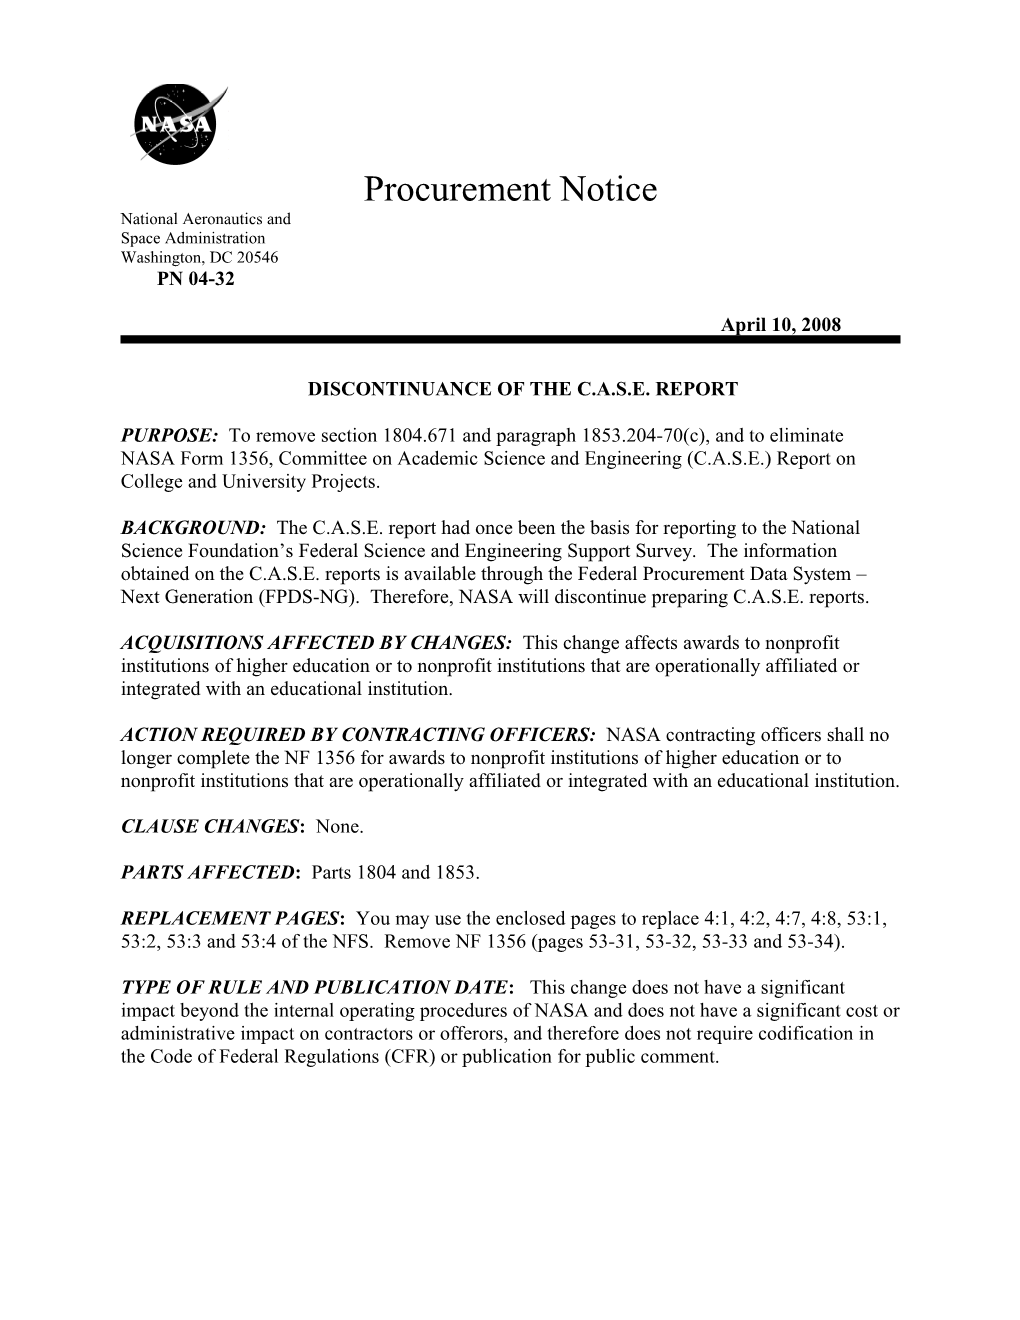 Procurement Notice s1